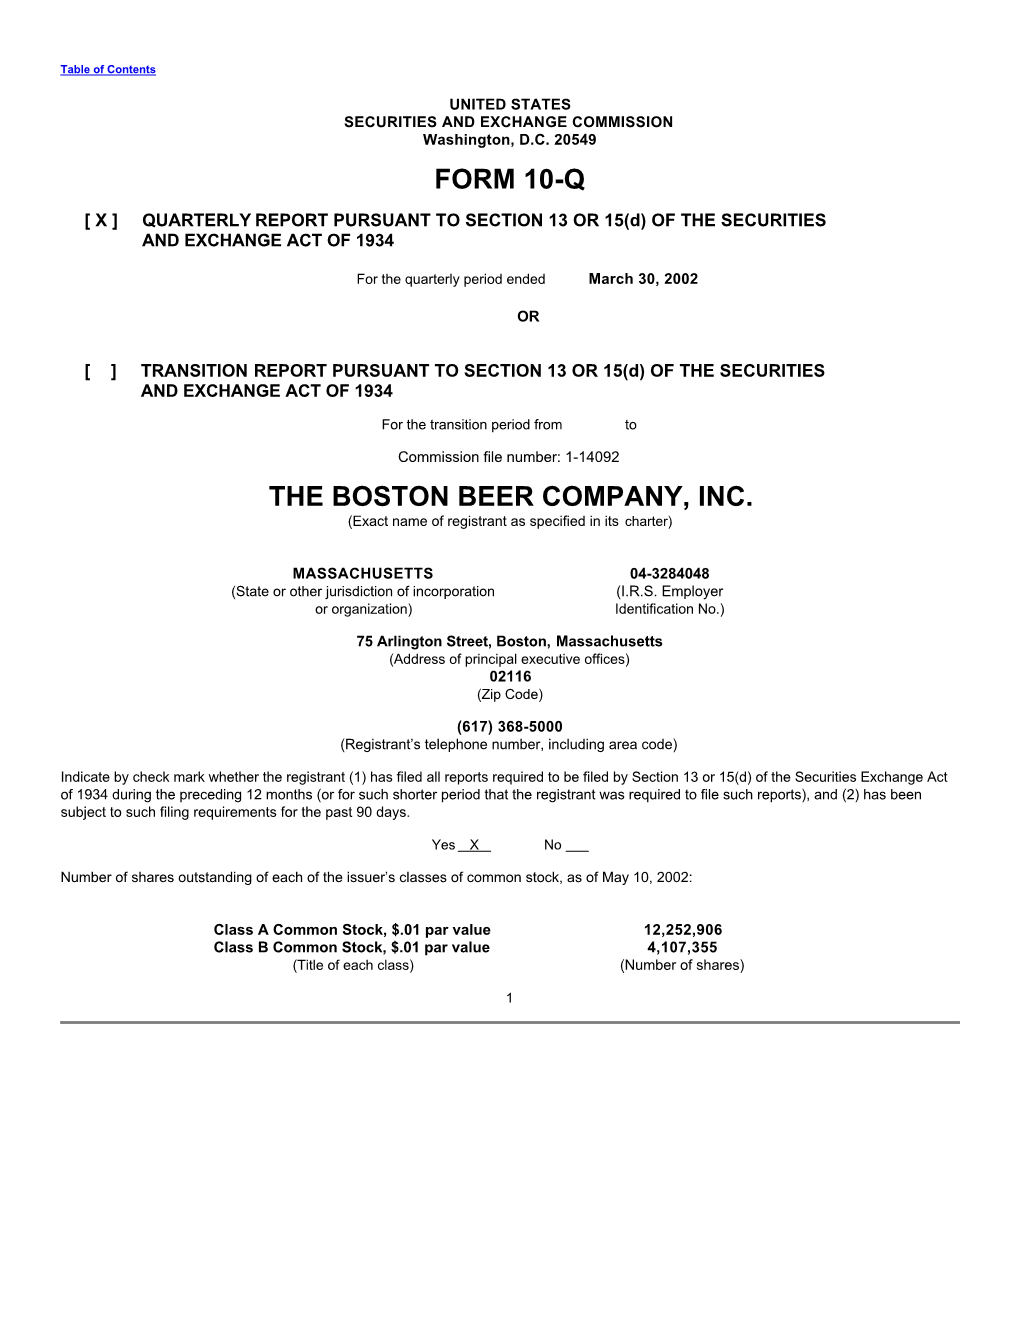 Form 10-Q the Boston Beer Company, Inc